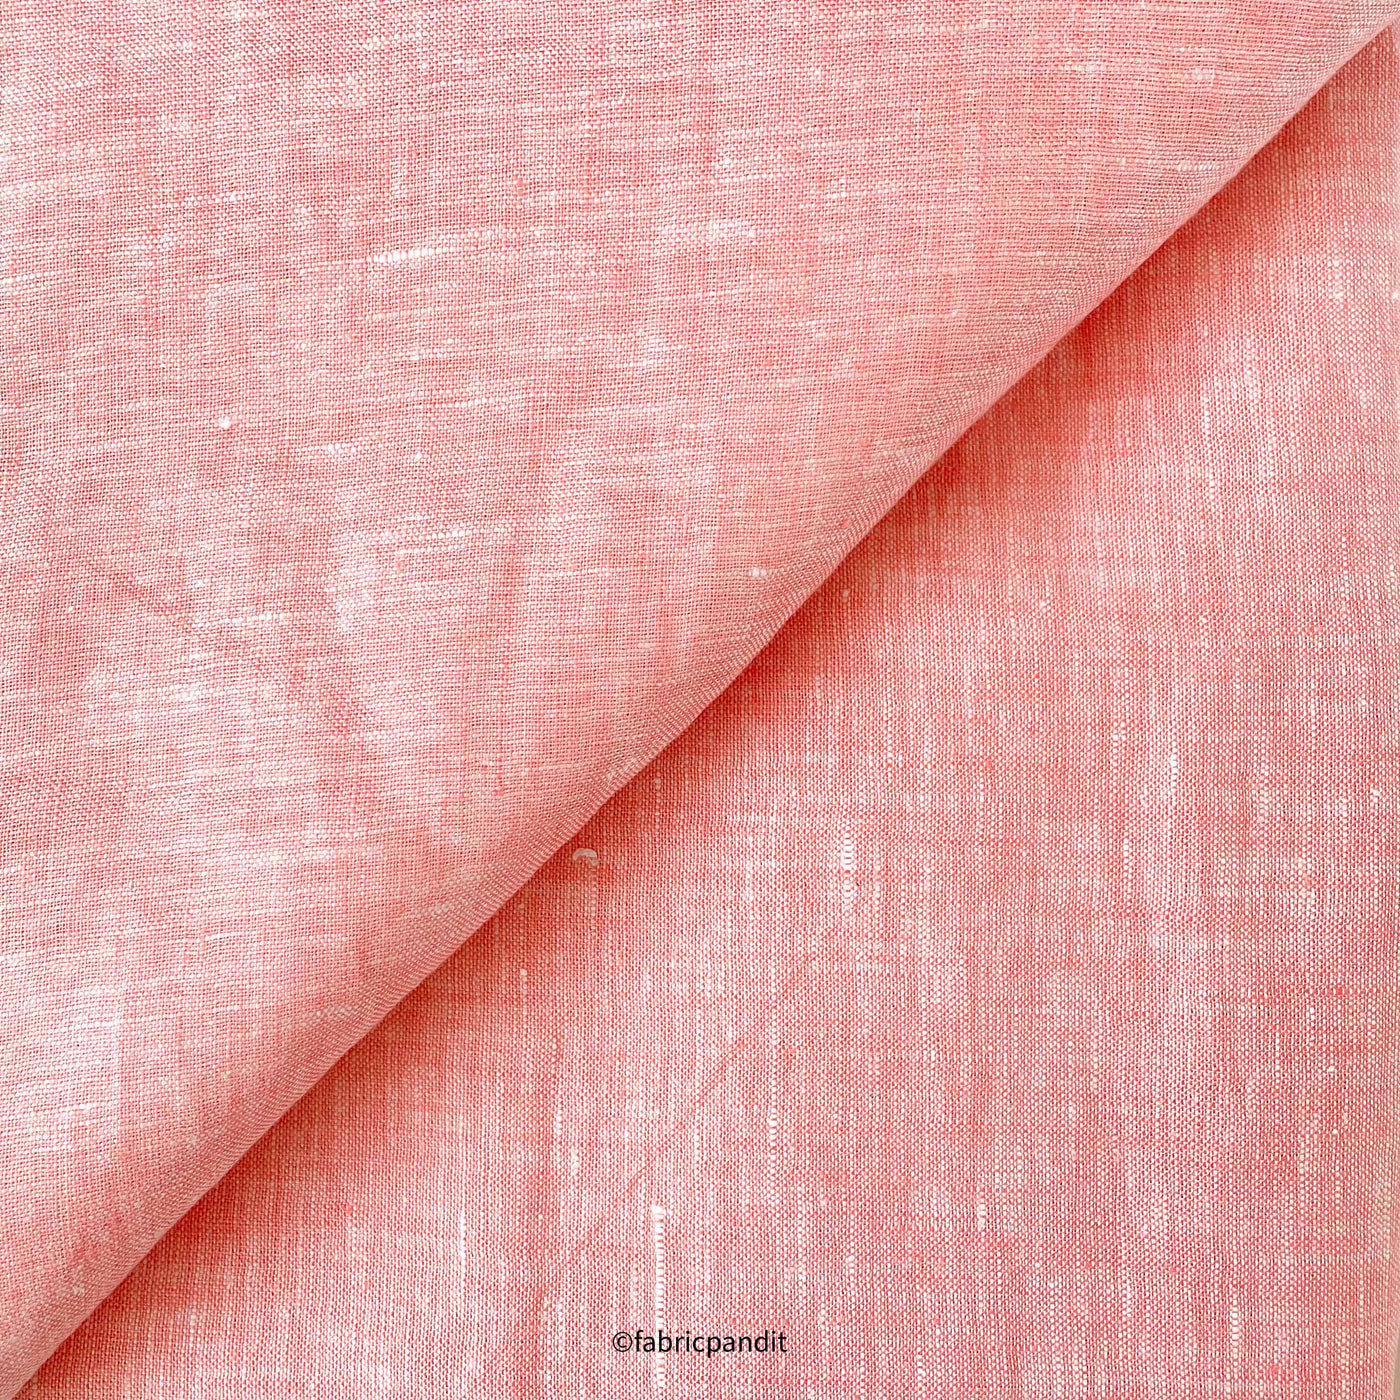 European Linen Fabric Cut Piece (CUT PIECE) Classic Peach Yarn Dyed Premium European Linen Fabric (58 Inches)